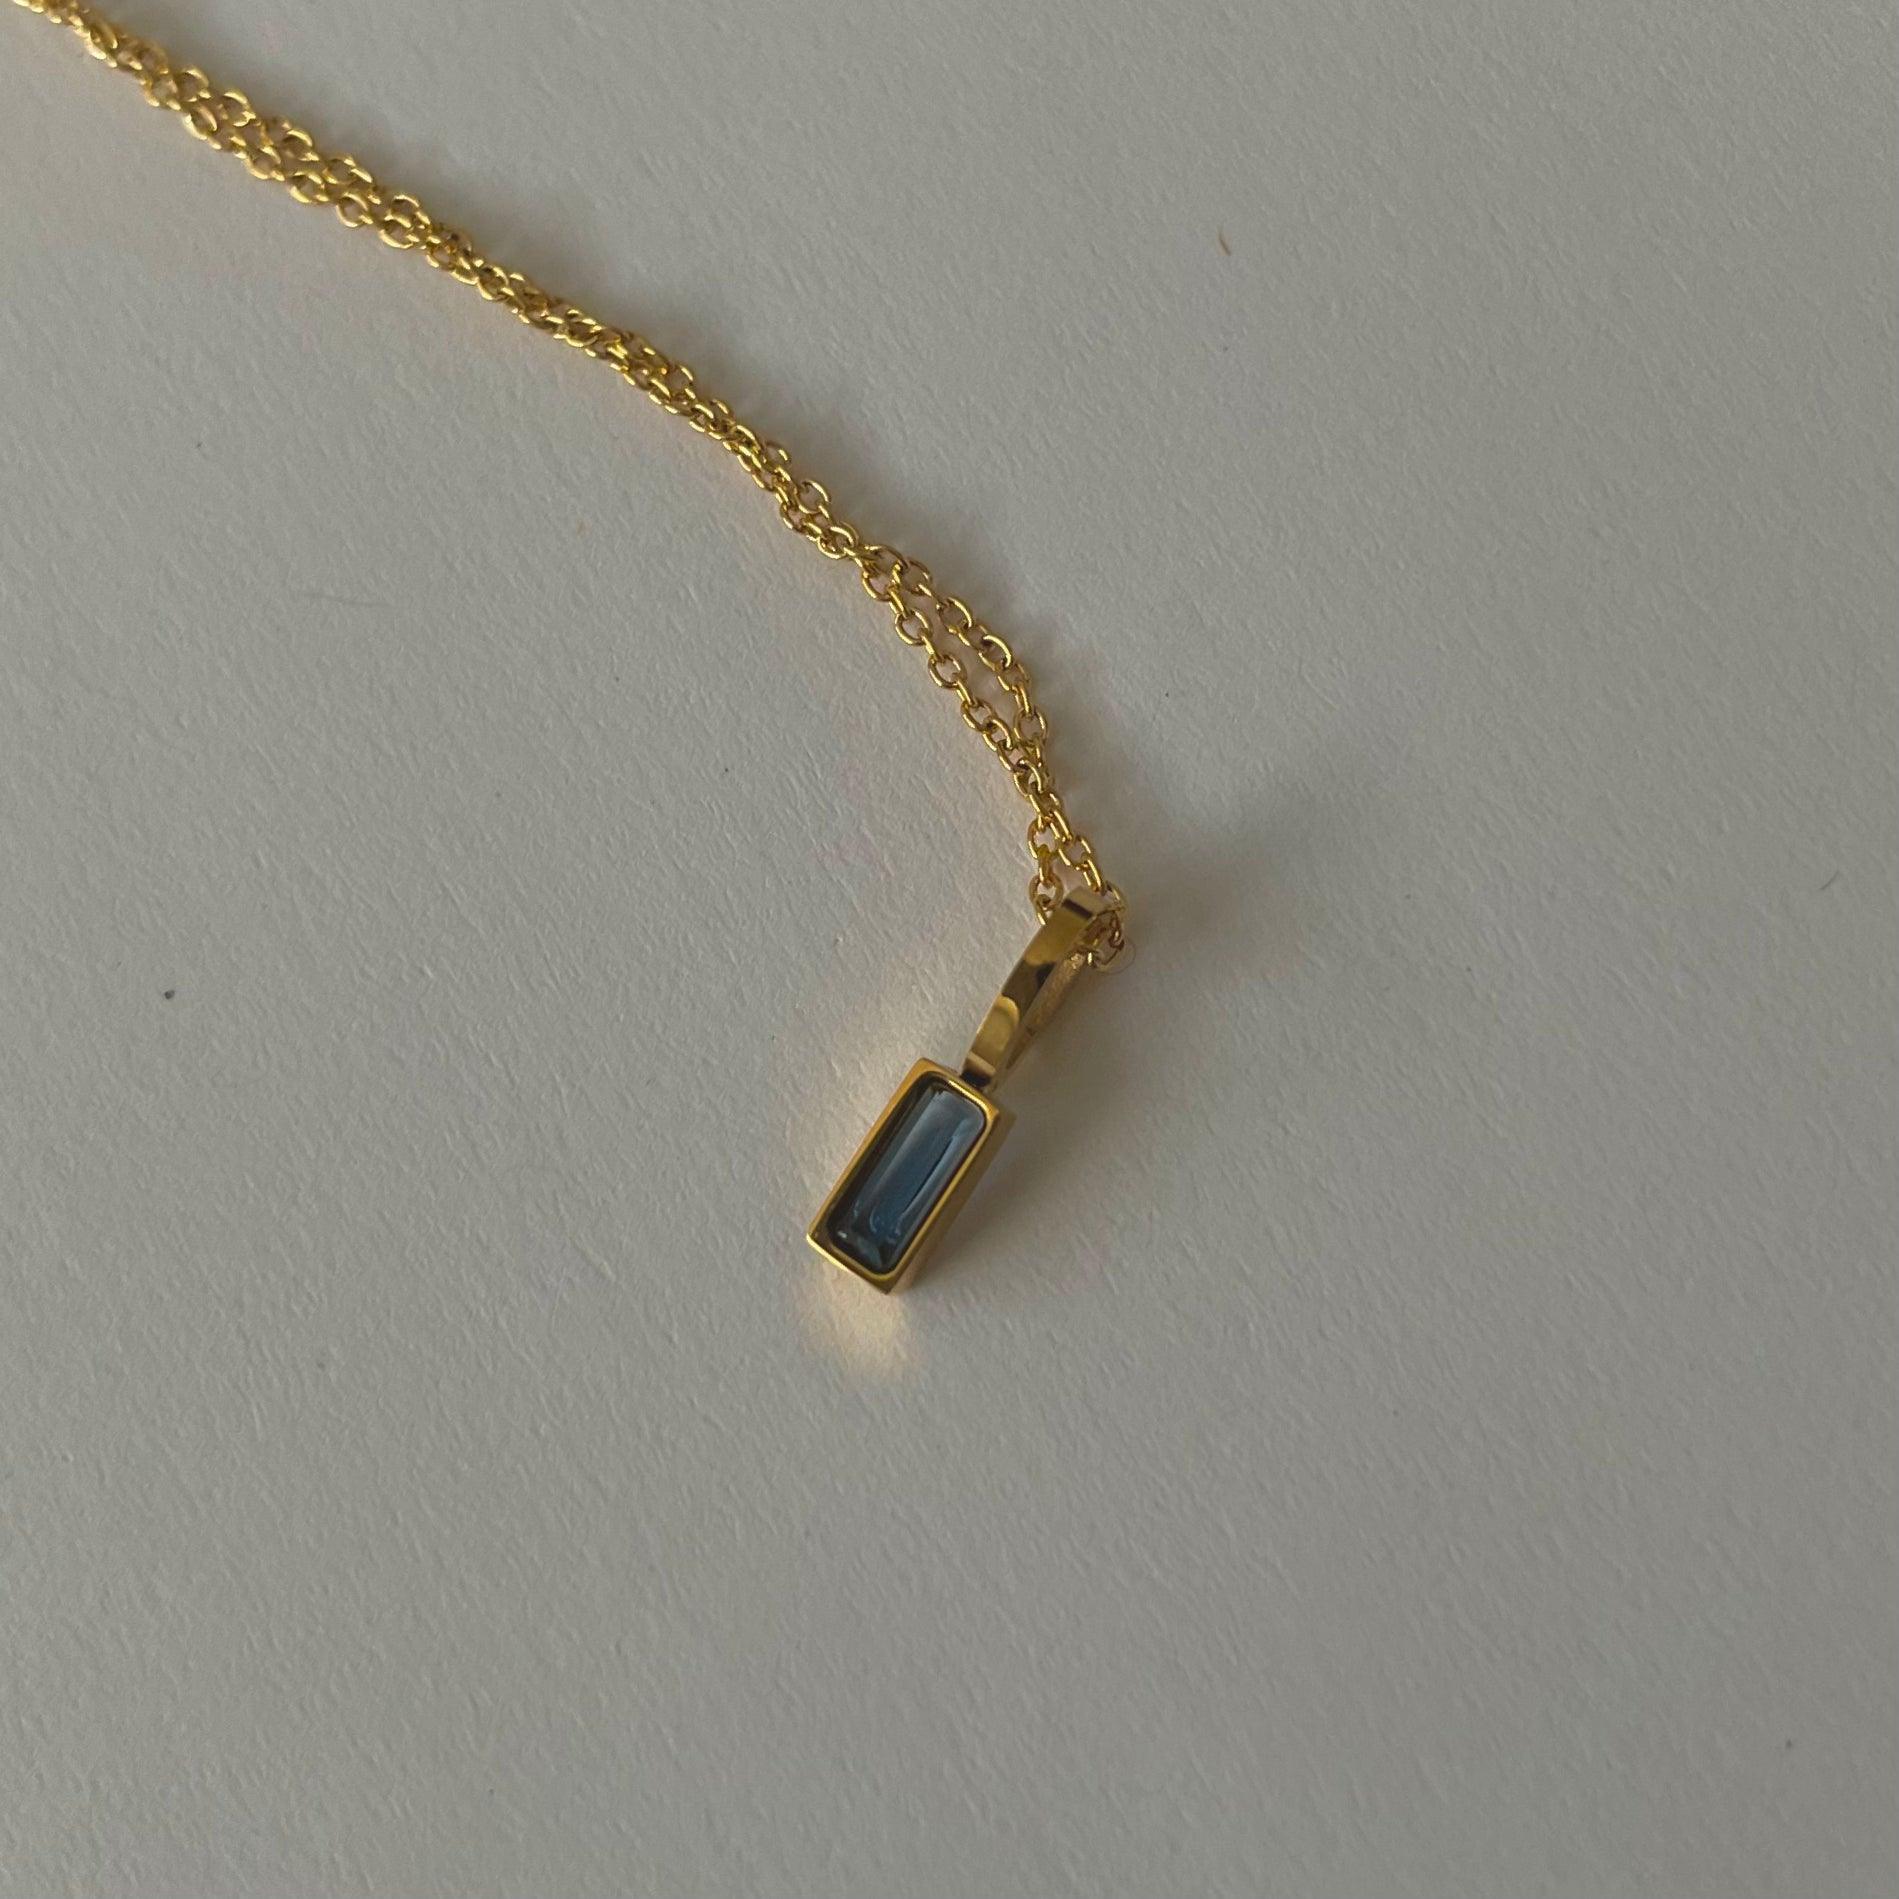 Birthstone Charm Necklace - 18k Gold PVD - The Smart Minimalist